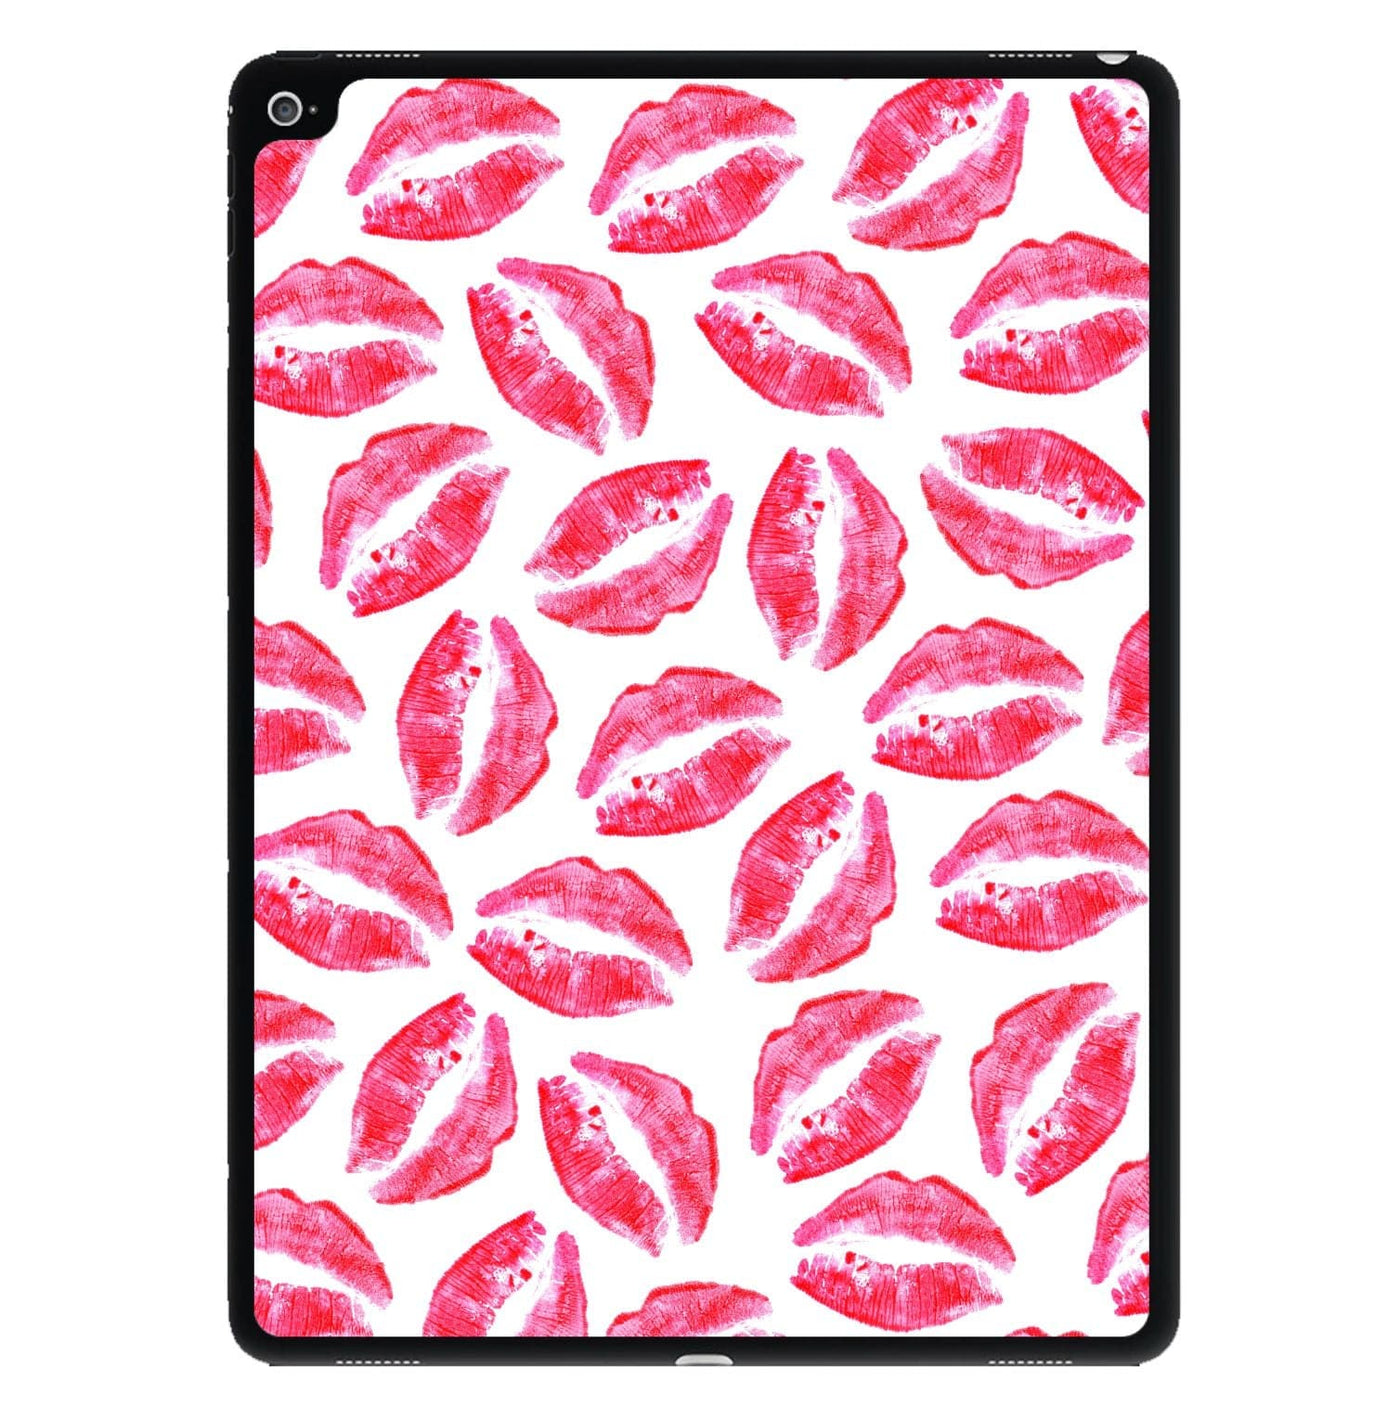 Kisses - Valentine's Day iPad Case